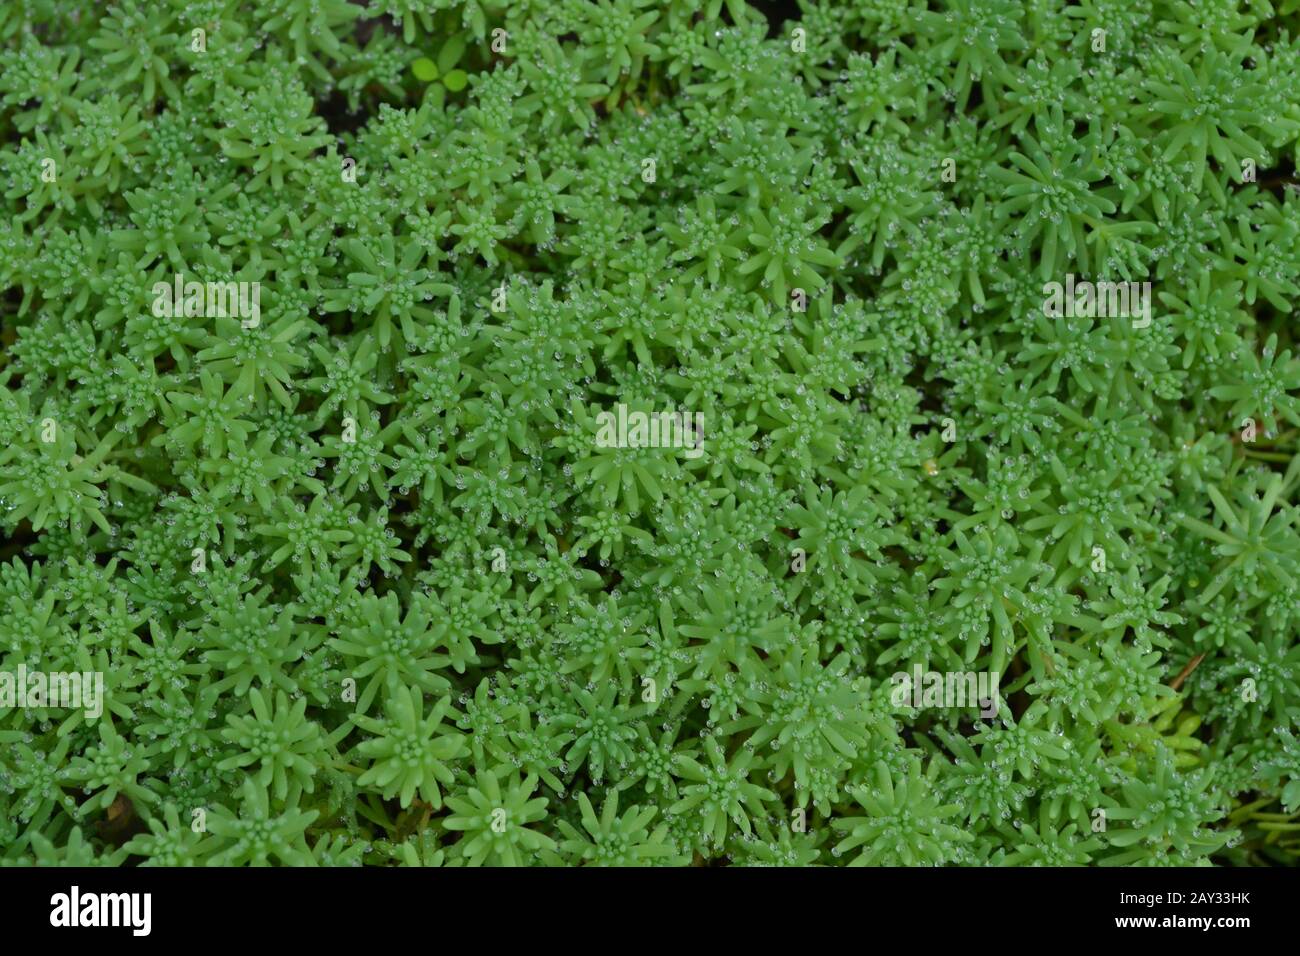 Stonecrop. Hare cabbage. Sedum. Green moss. Decorative grassy carpet. Ornamental garden plants. Close-up Stock Photo